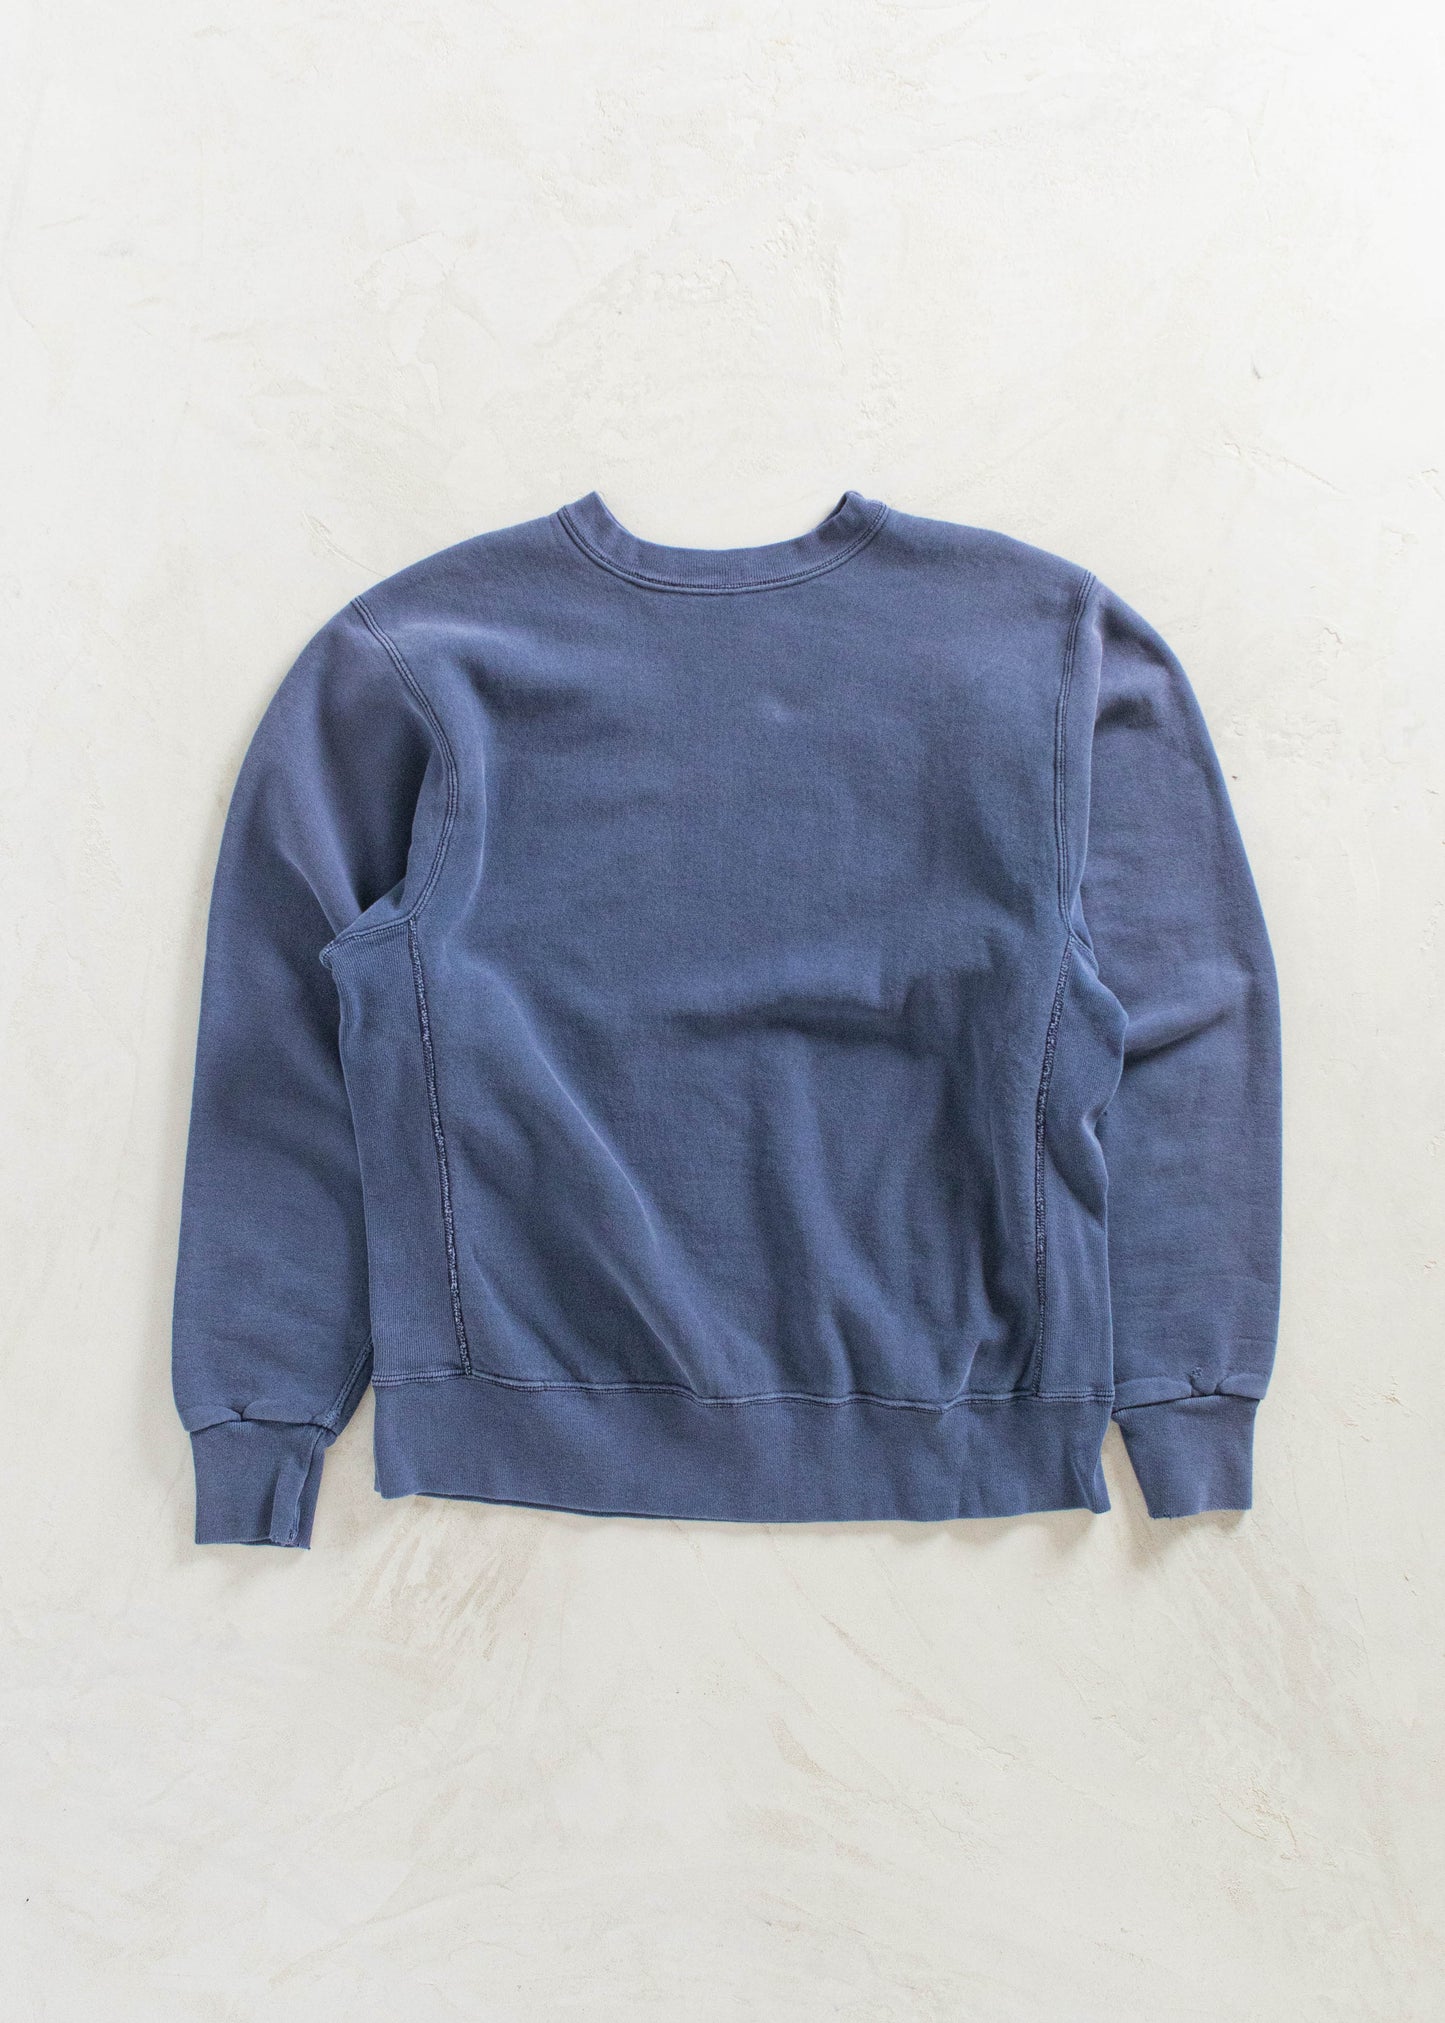 Vintage 1990s Champion Reverse Weave William Mitchell College Of Law Sweatshirt Size L/XL